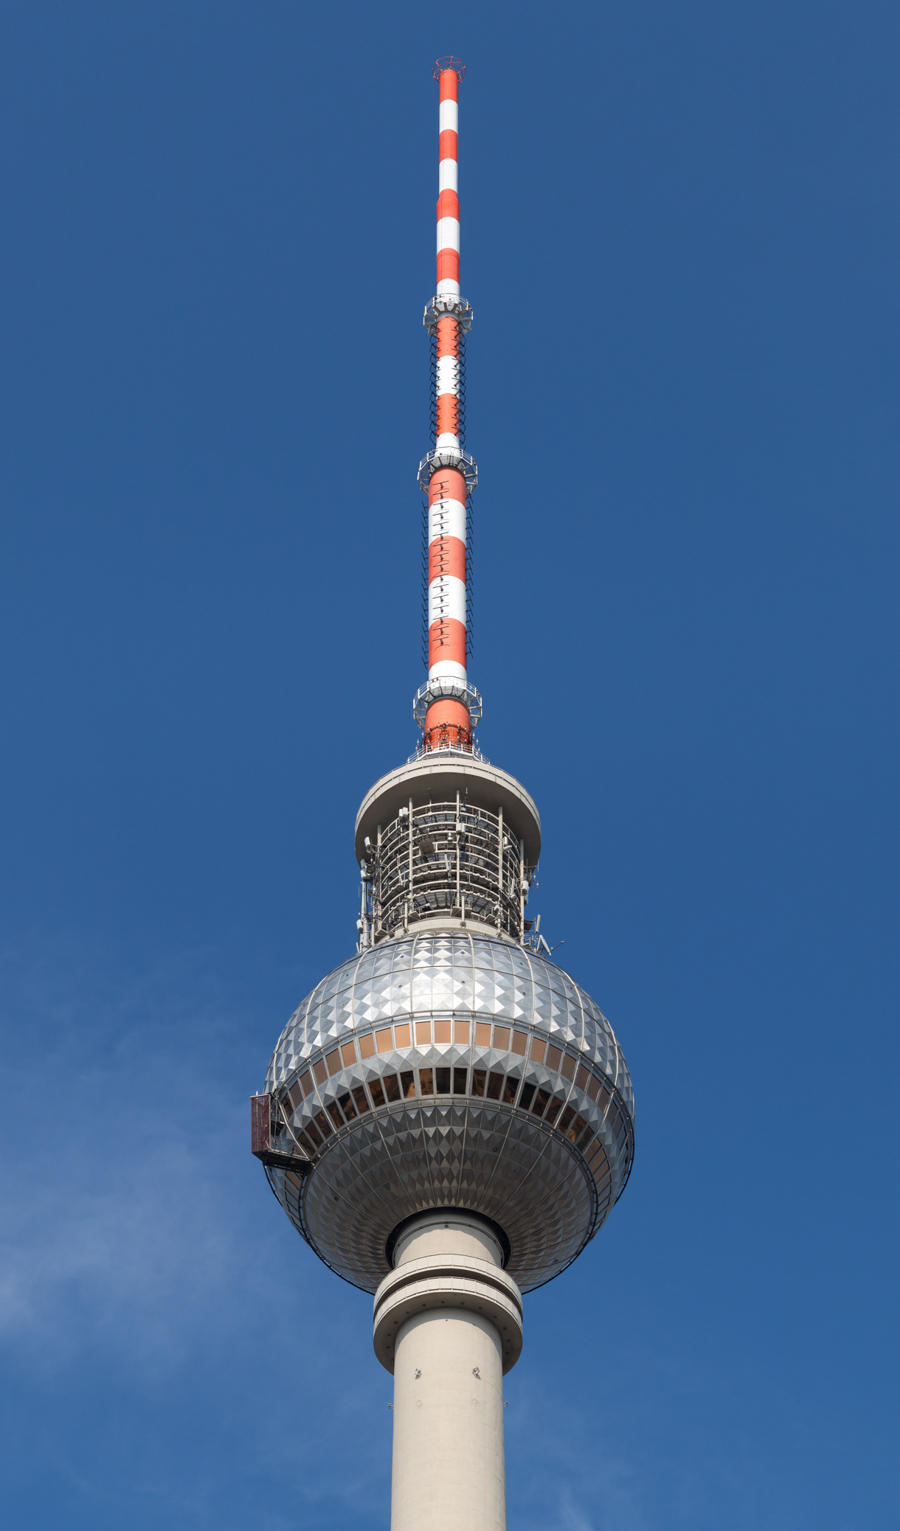 Image source Berlin Fernsehturm